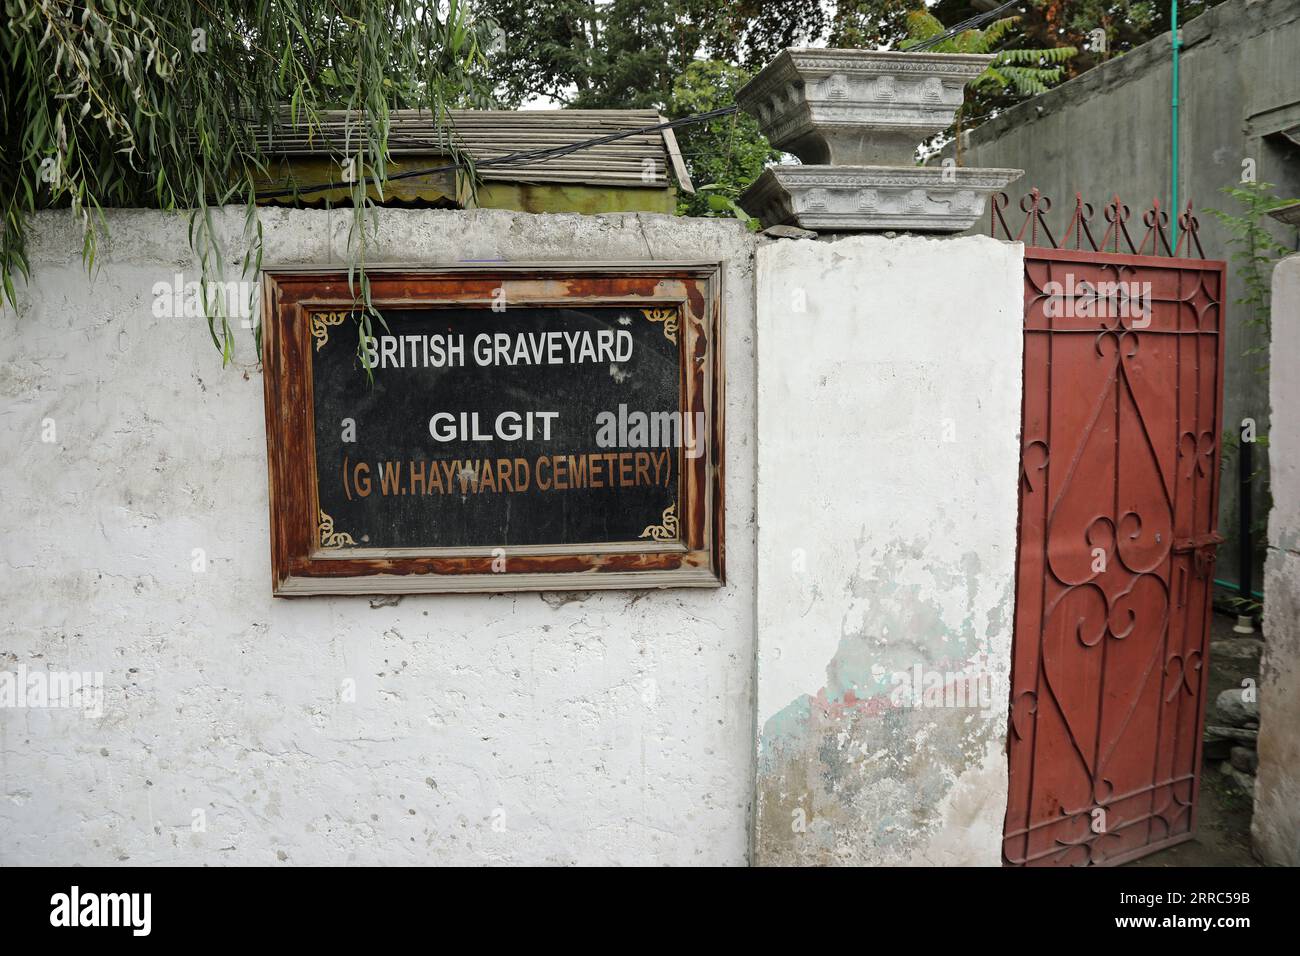 British Graveyard at Gilgit in Pakistan Stock Photo